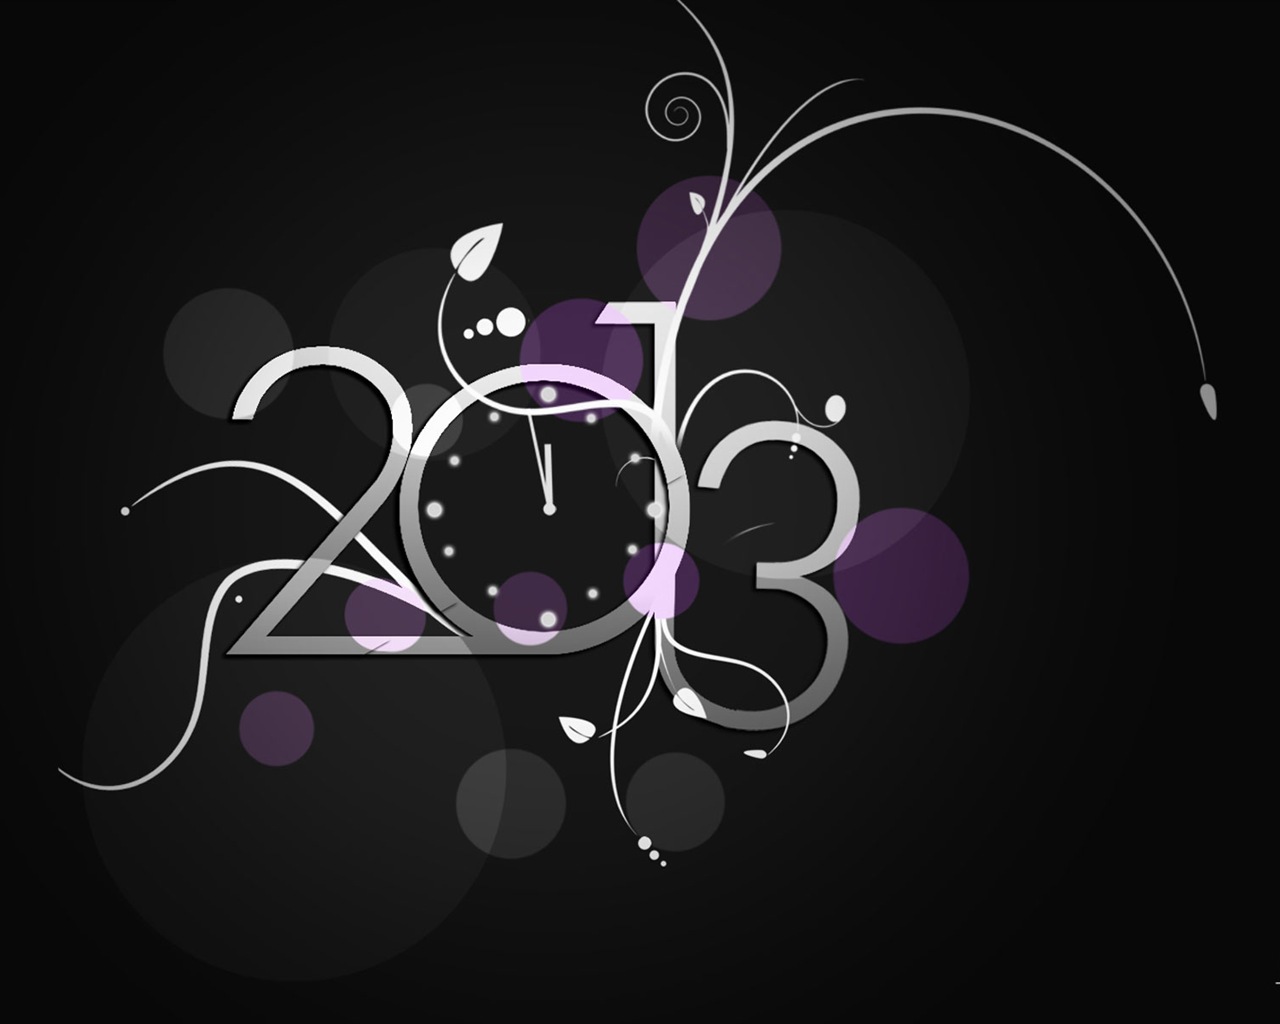 2013 New Year theme creative wallpaper(2) #12 - 1280x1024